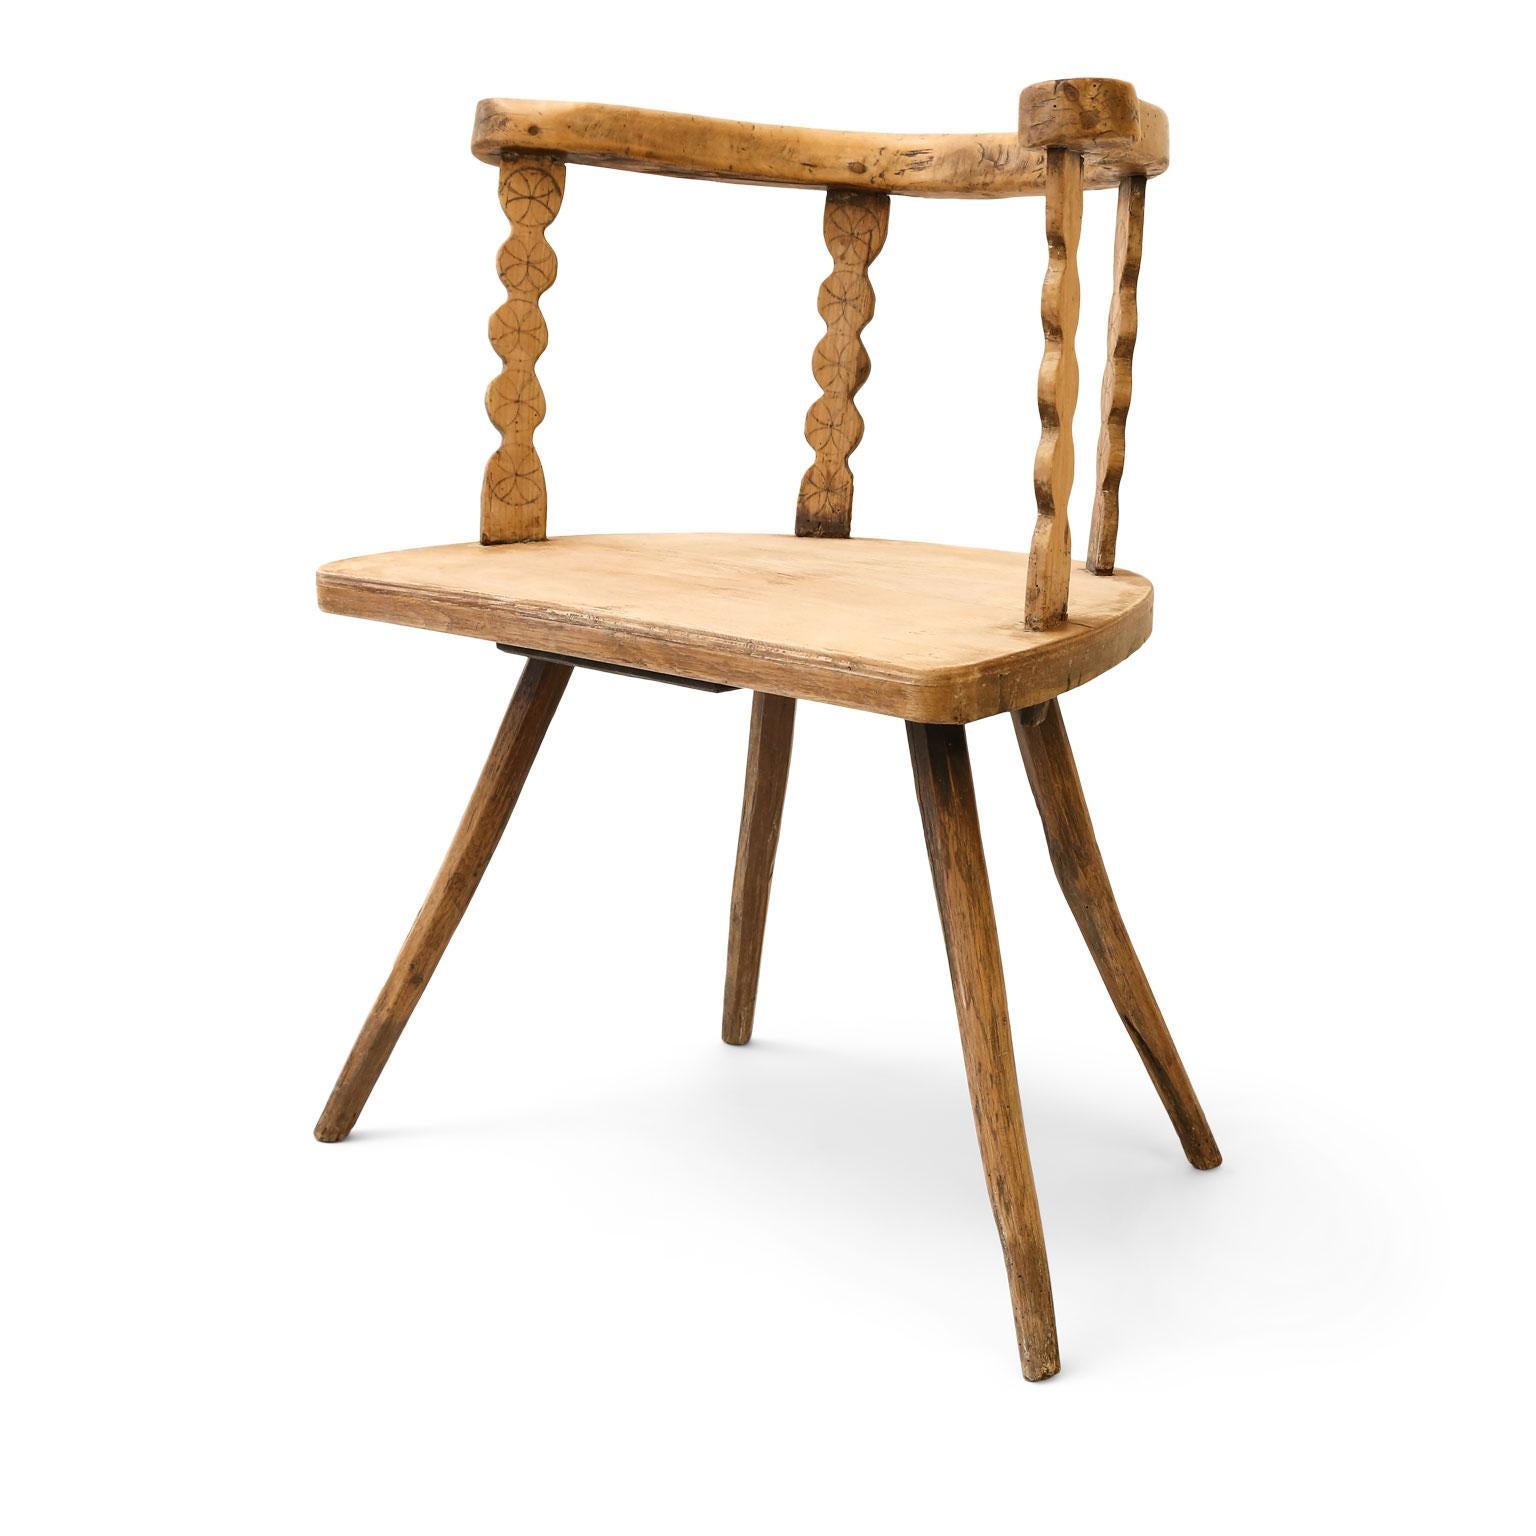 Swedish Vernacular Chair 4